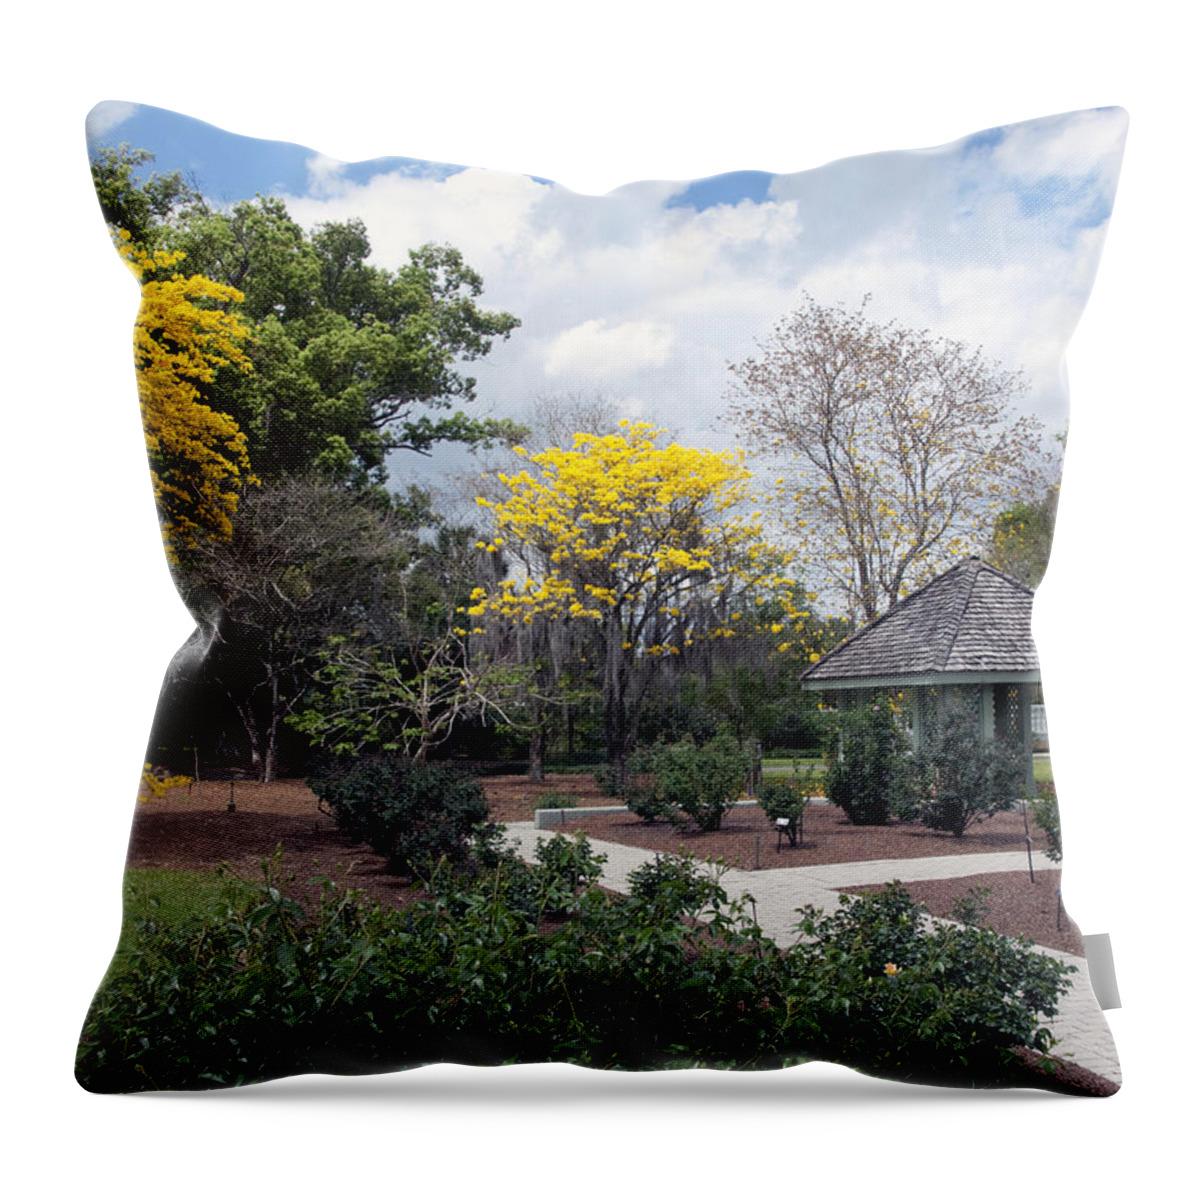 Golden Throw Pillow featuring the photograph Golden Trumpet Trees by Allan Hughes